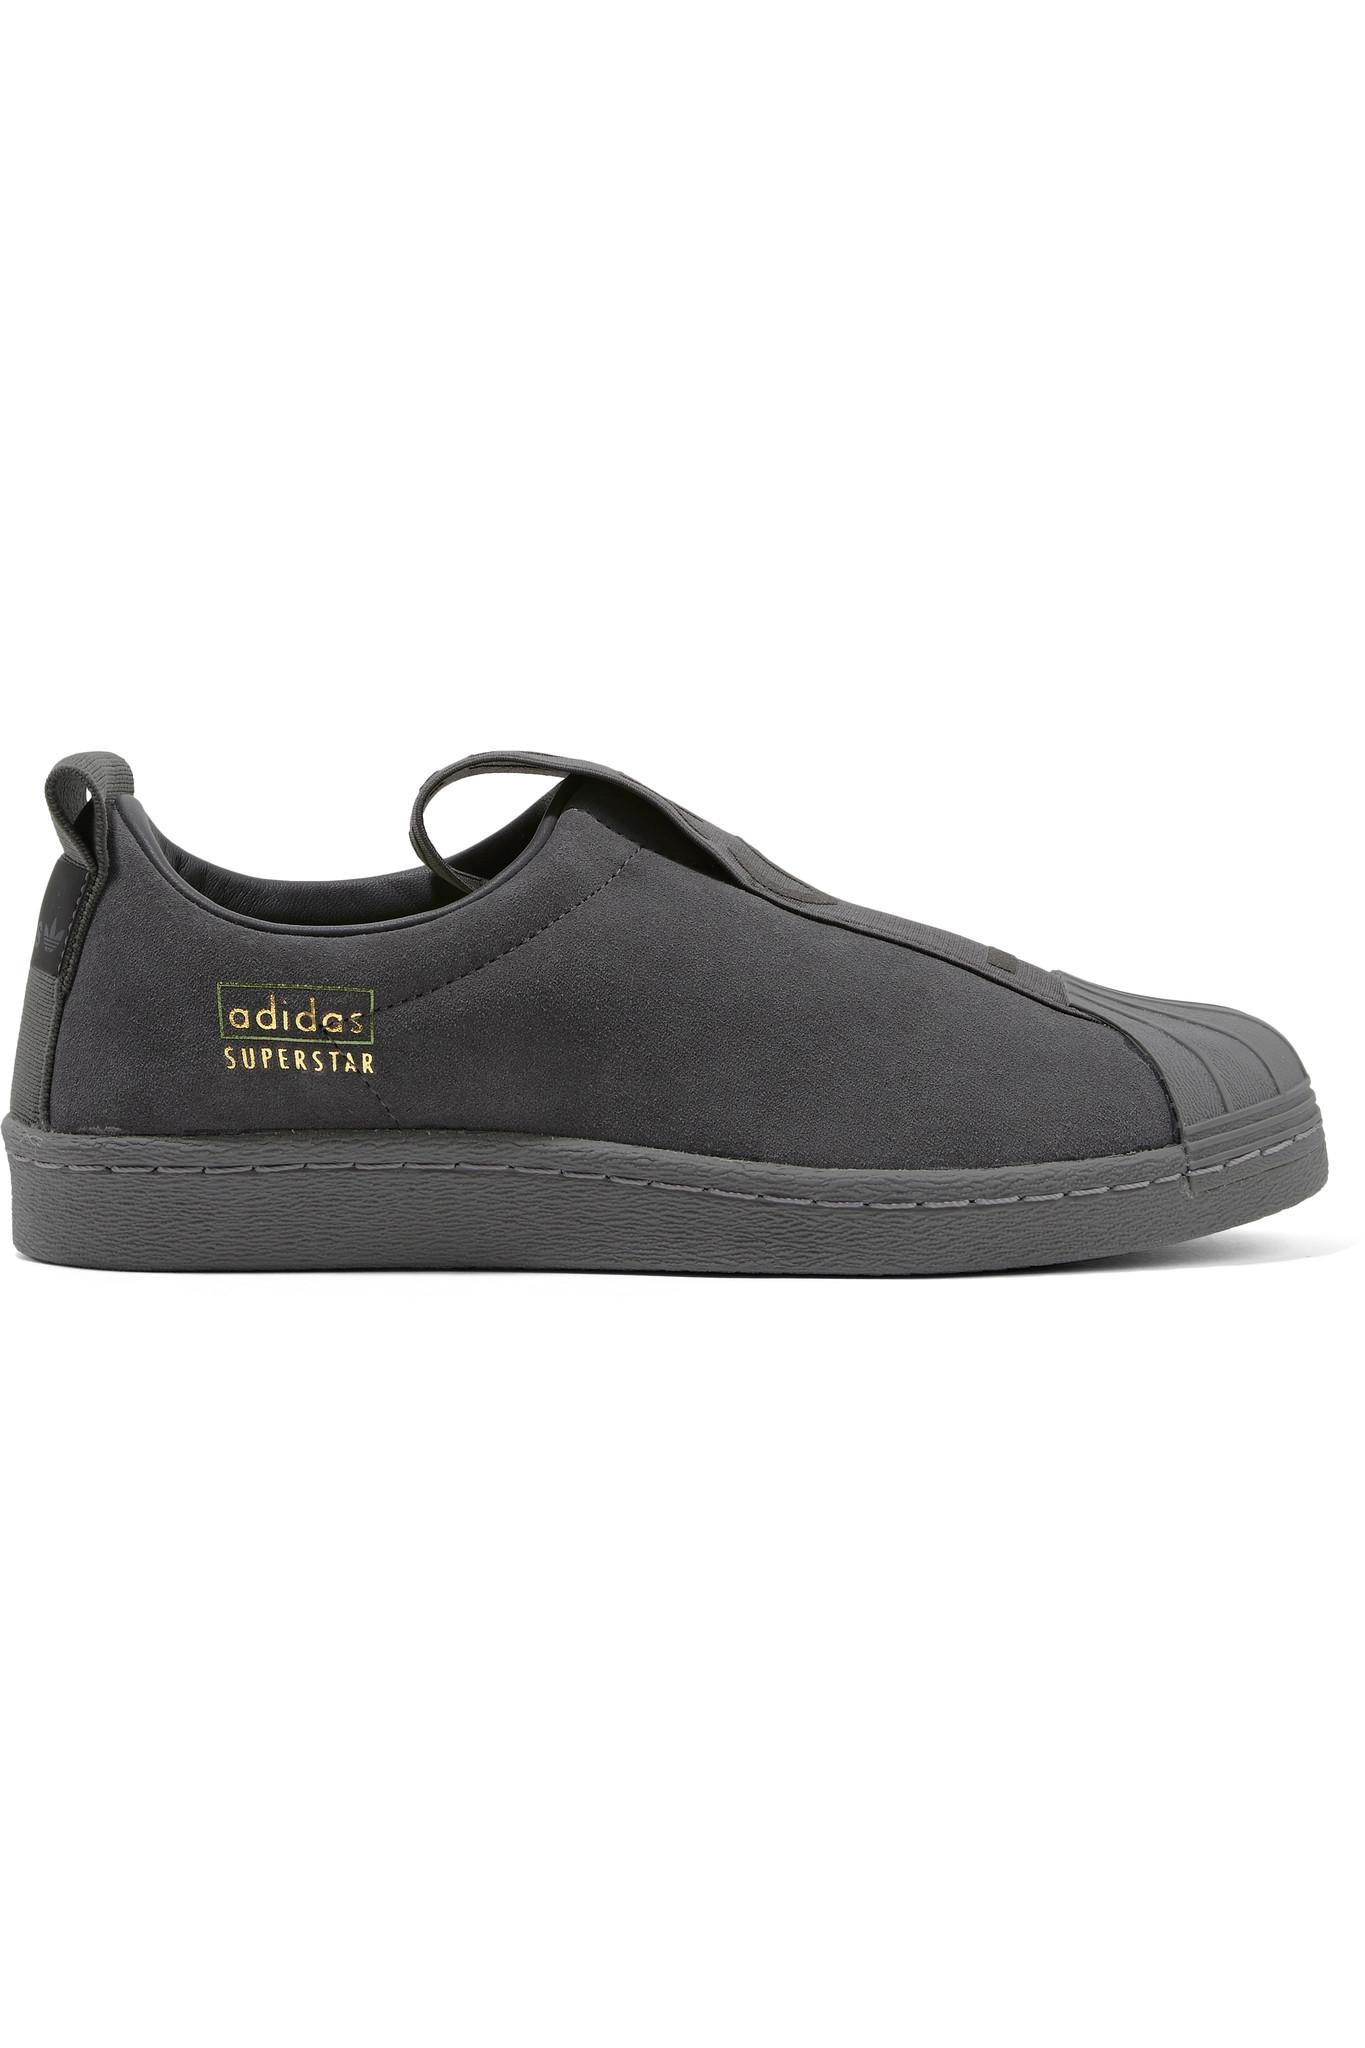 adidas Originals Superstar Suede Slip-on Sneakers in Dark Gray (Gray) - Lyst